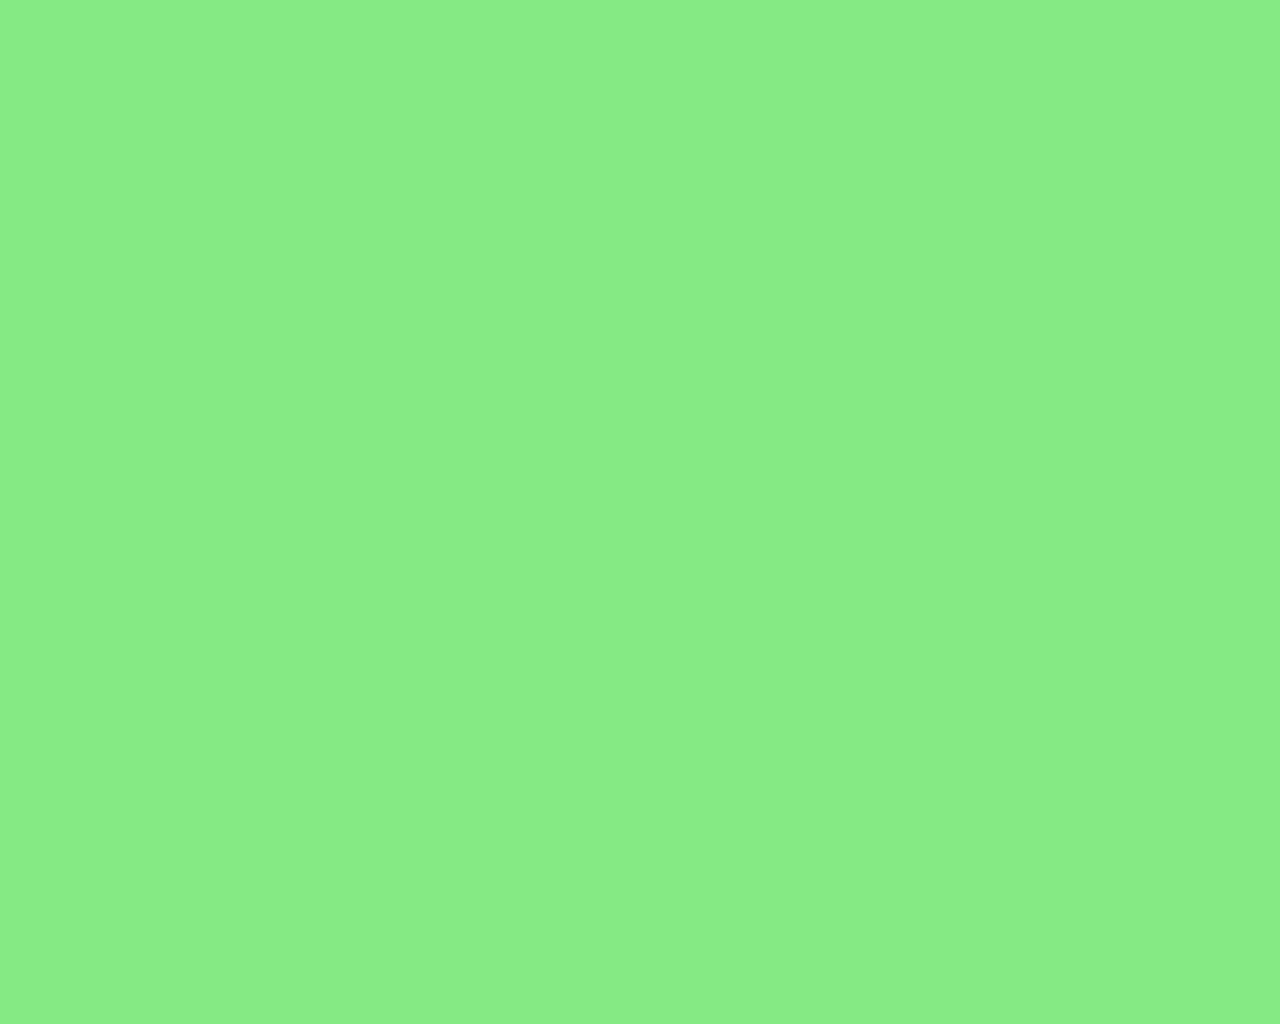 Unembellished Light Green Plain Background